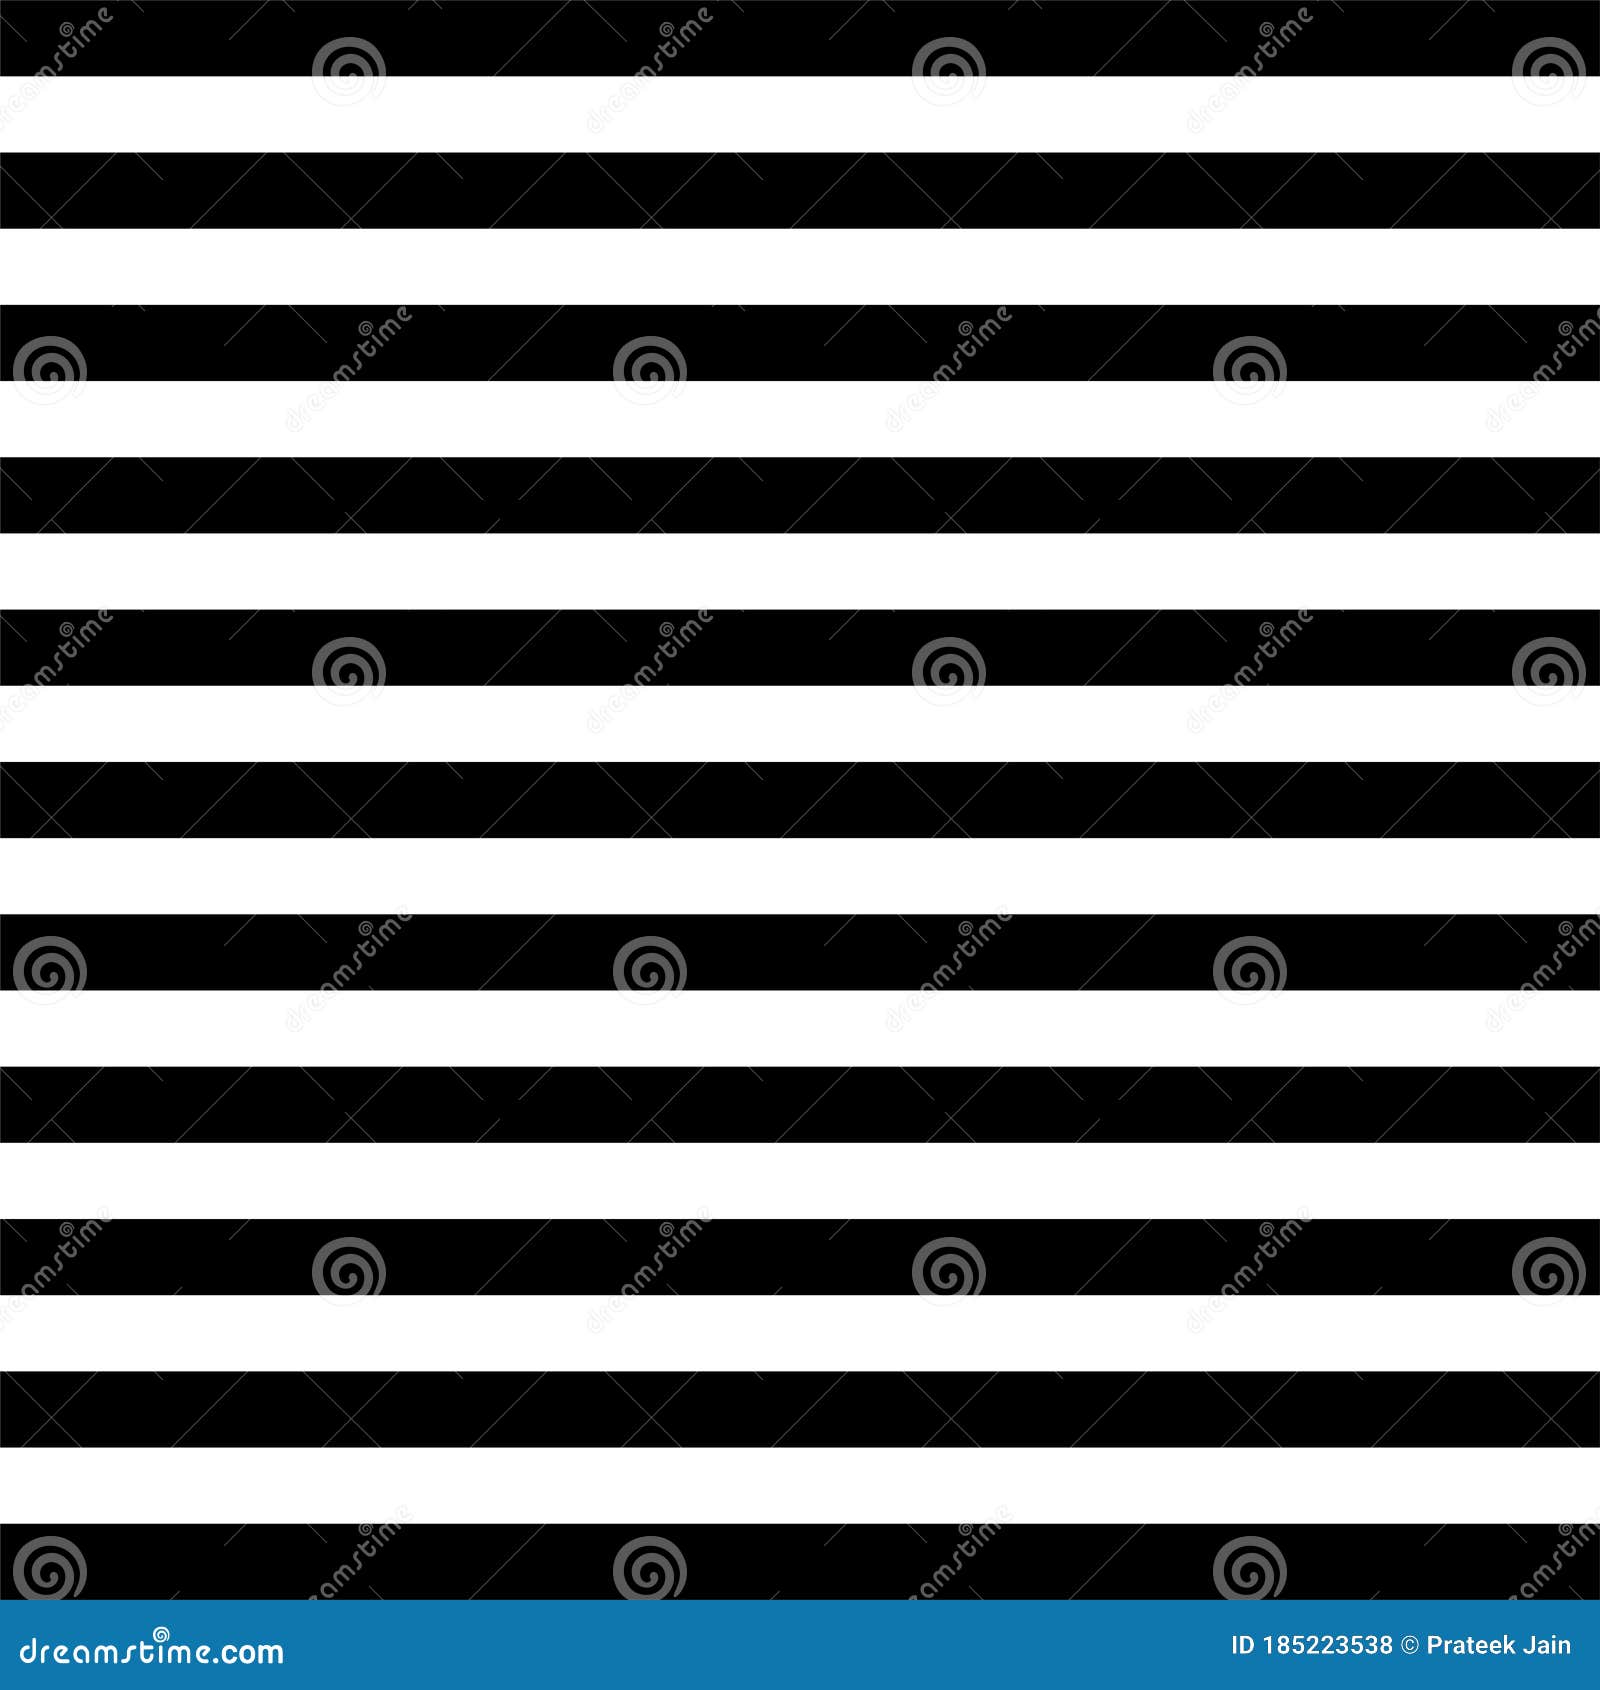 https://thumbs.dreamstime.com/z/strip-horizontal-lines-line-spacing-black-white-stripes-seamless-stripe-grunge-pattern-abstract-backgrounds-illustration-185223538.jpg